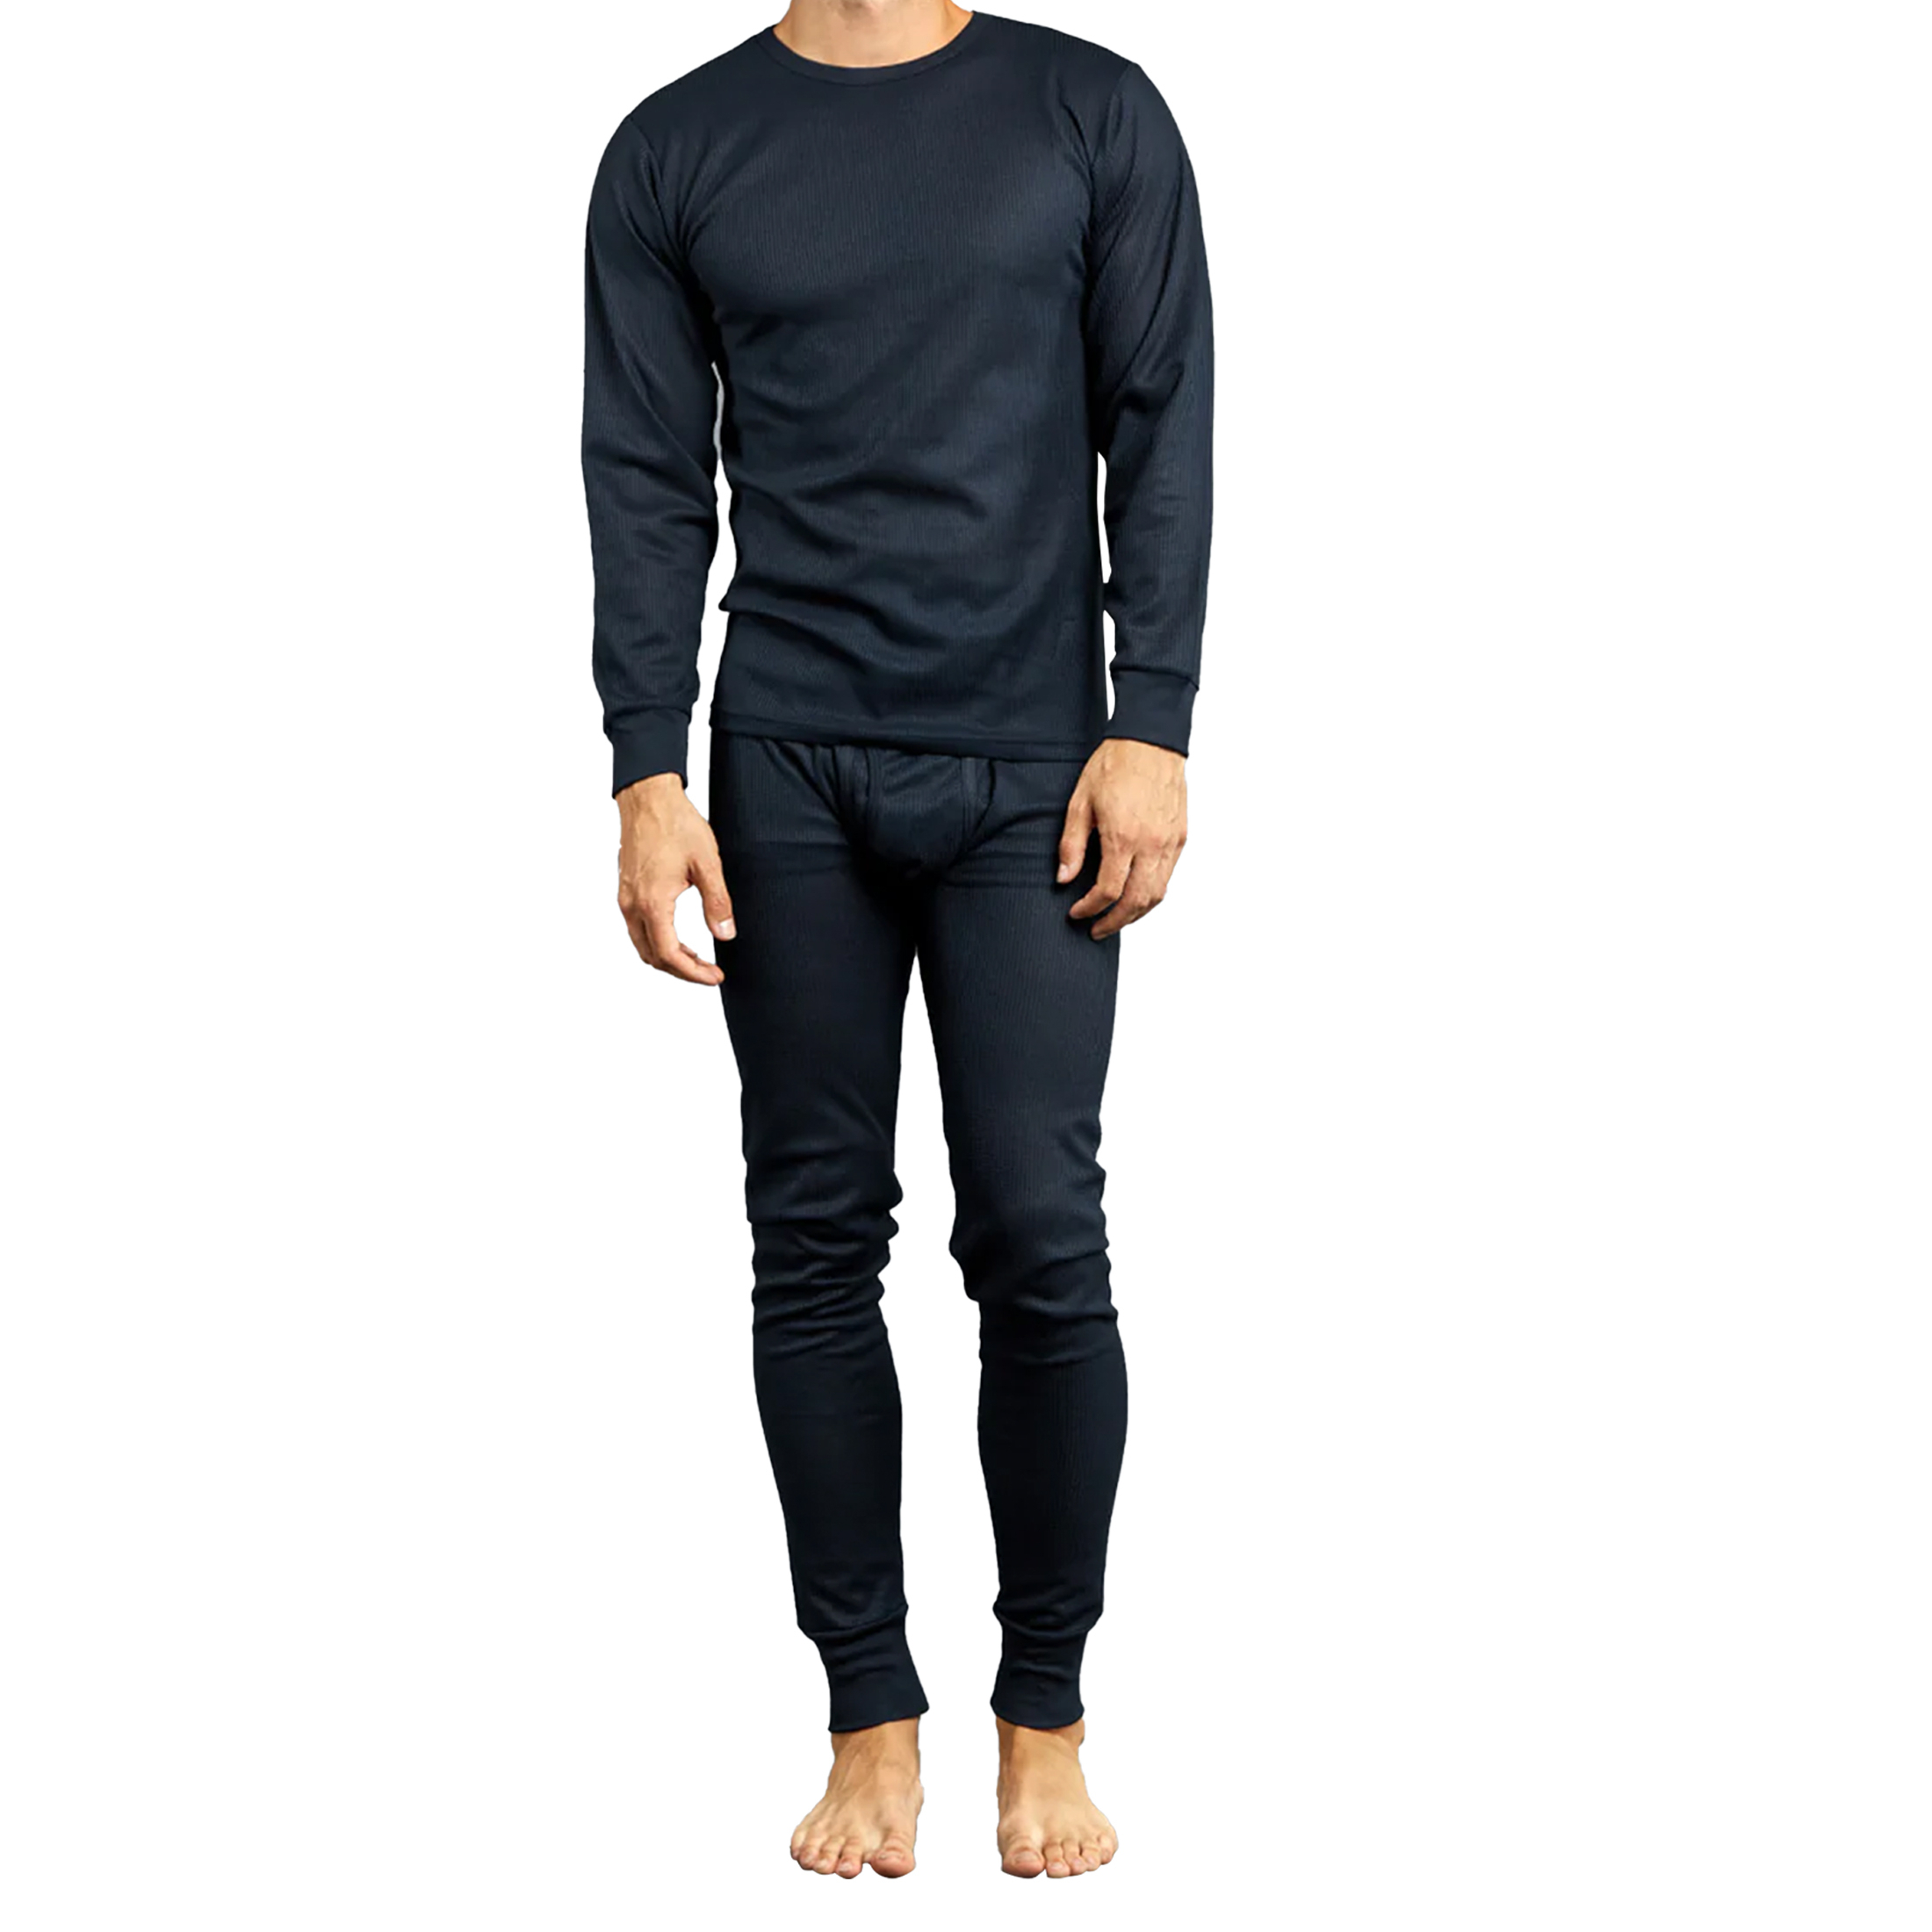 2-Piece: Men's Moisture Wicking Long Johns Base Layer Thermal Underwear Set (Top & Bottom) - Grey, 2X-Large